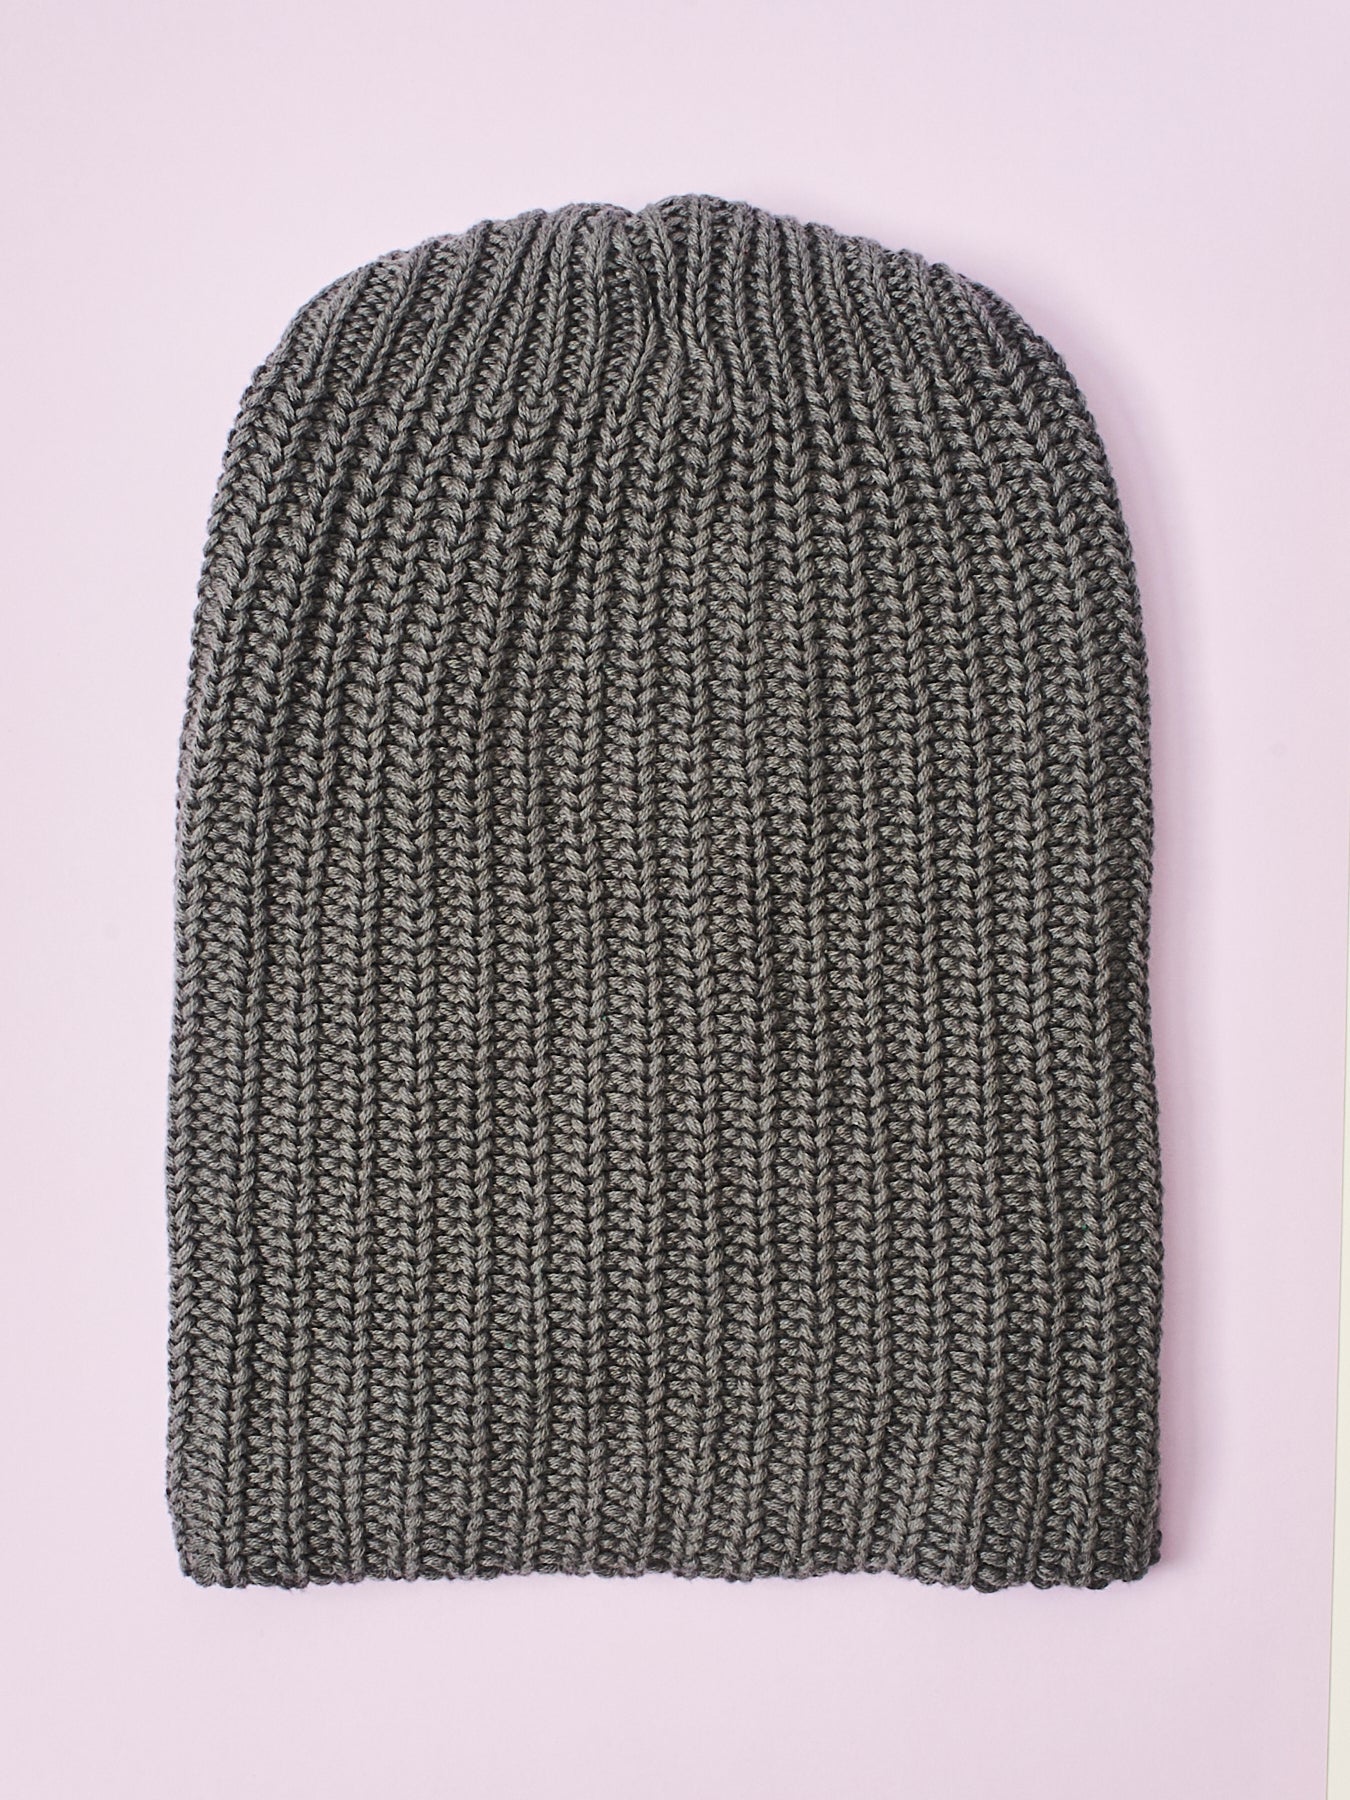 Cotton Knit Hats - Solid Colors